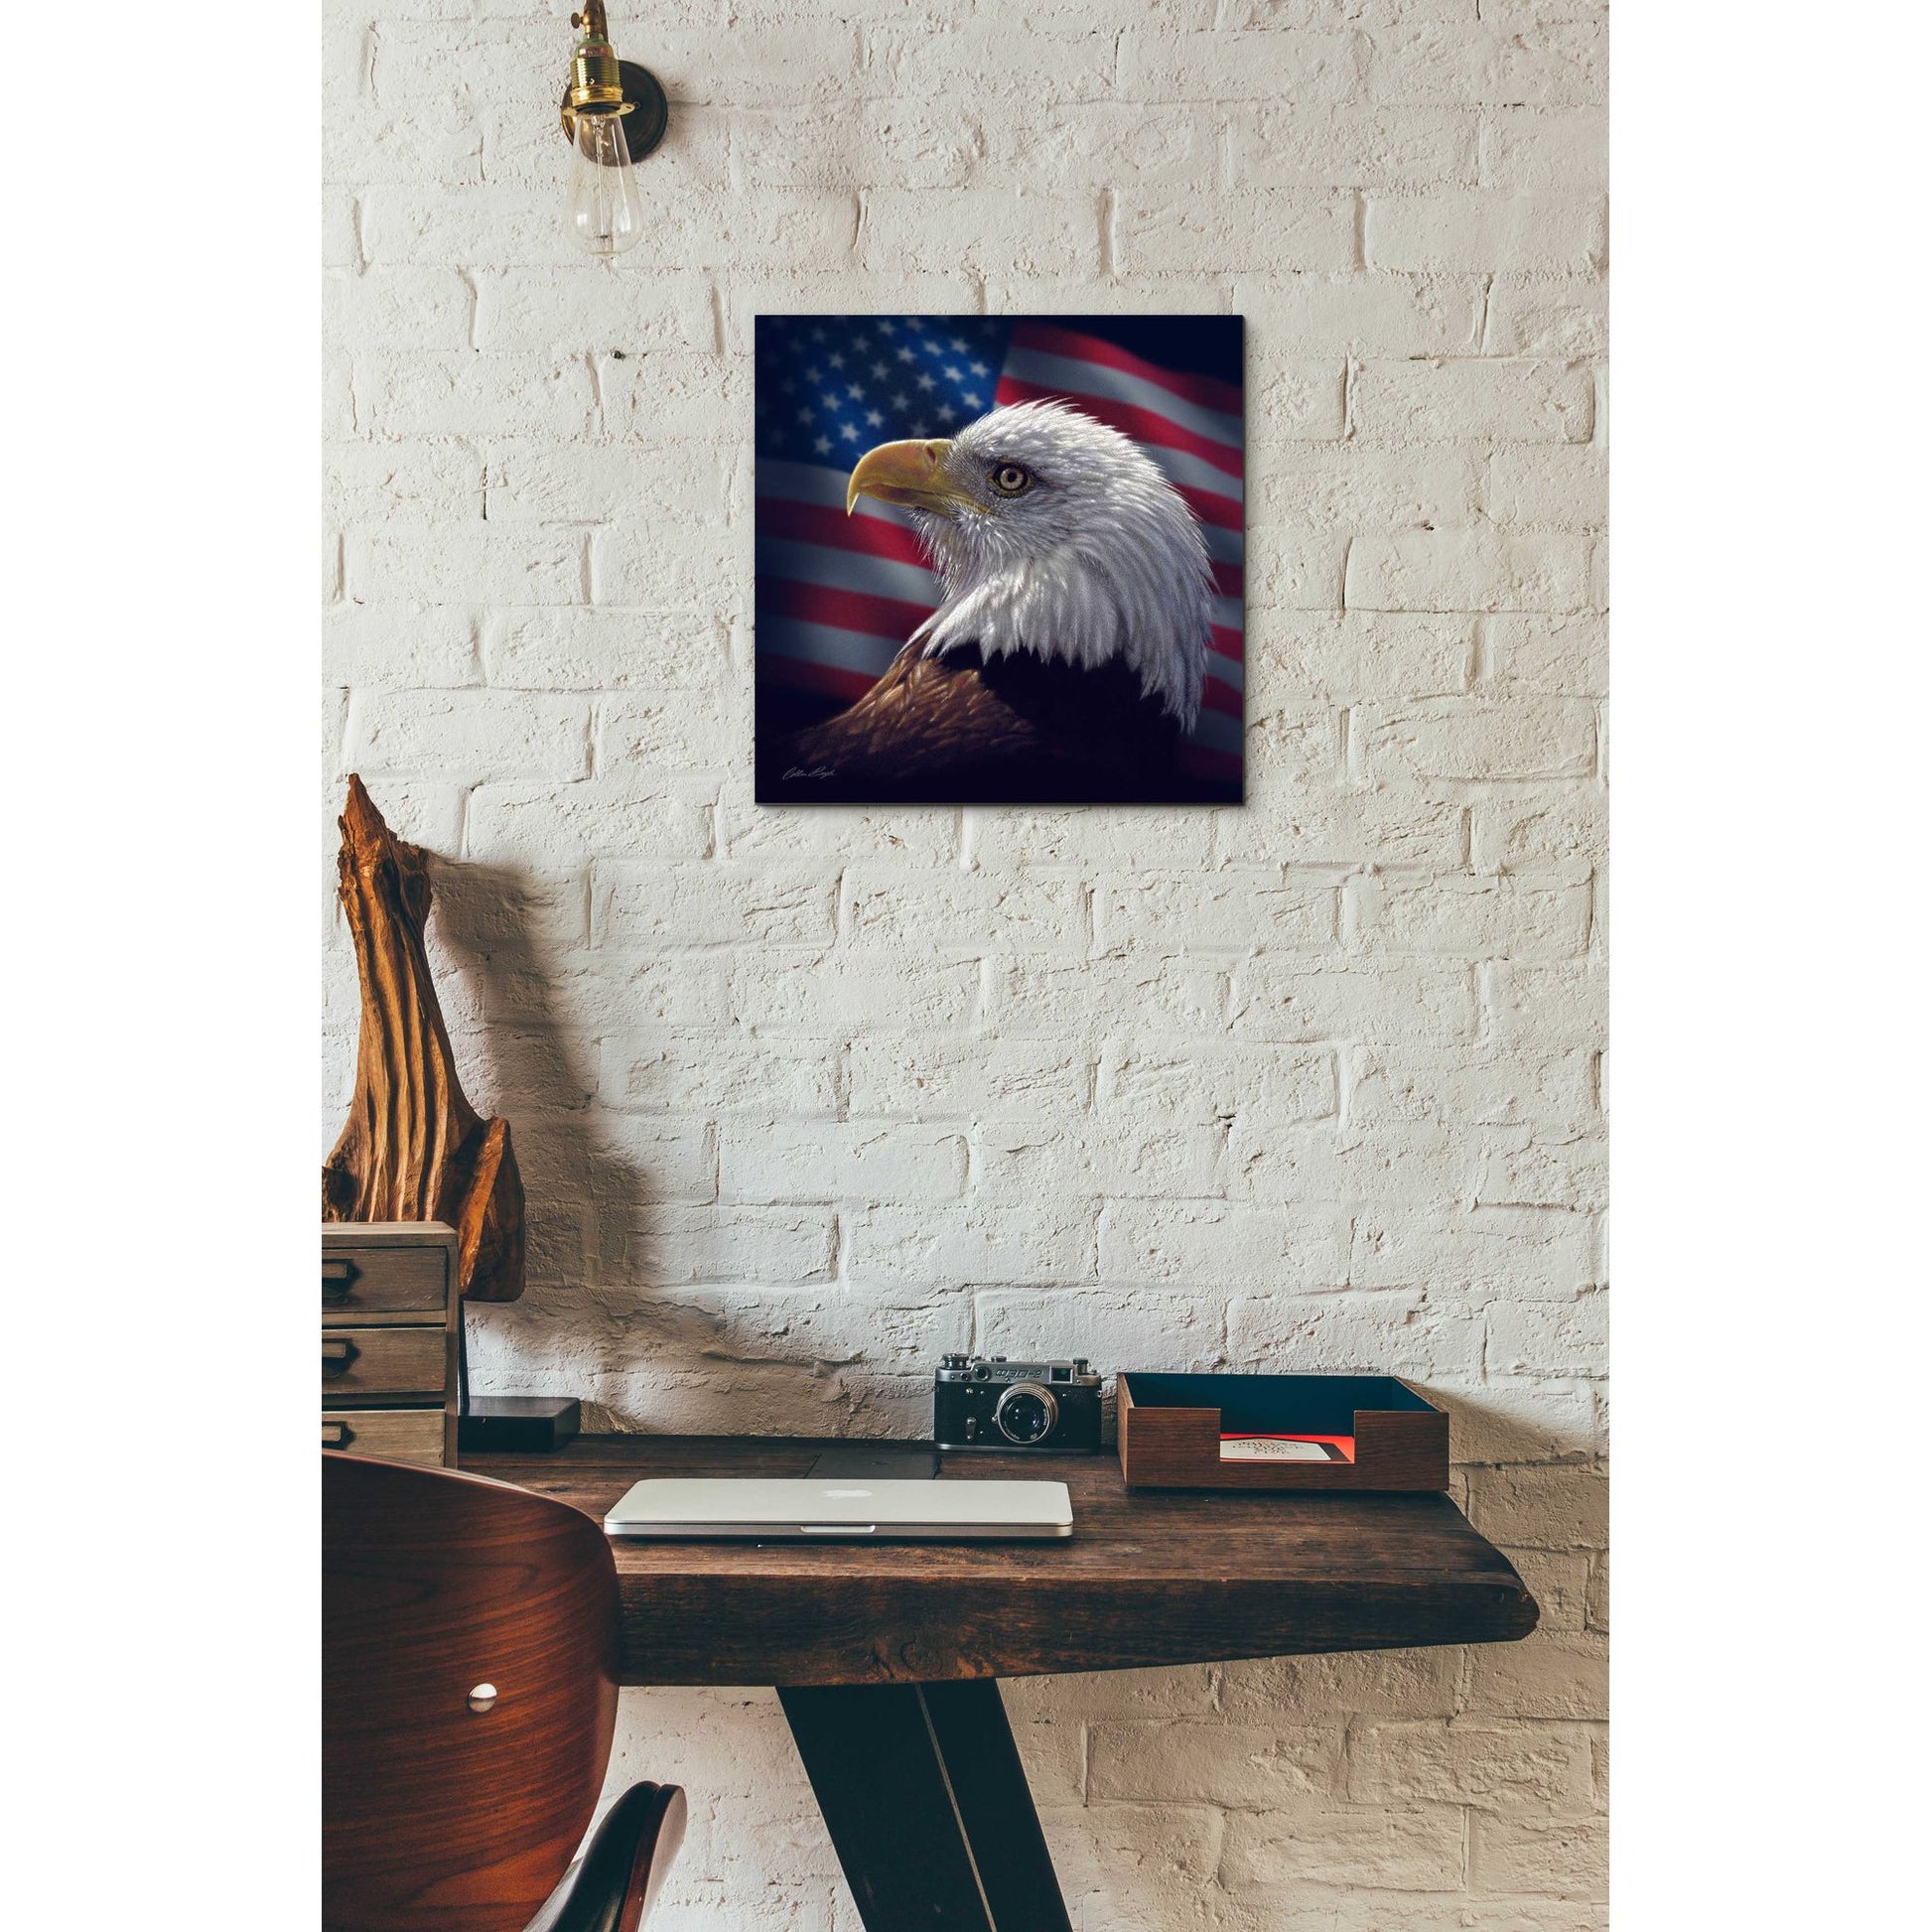 Epic Art 'American Bald Eagle' by Collin Bogle Acrylic Glass Wall Art,12x12